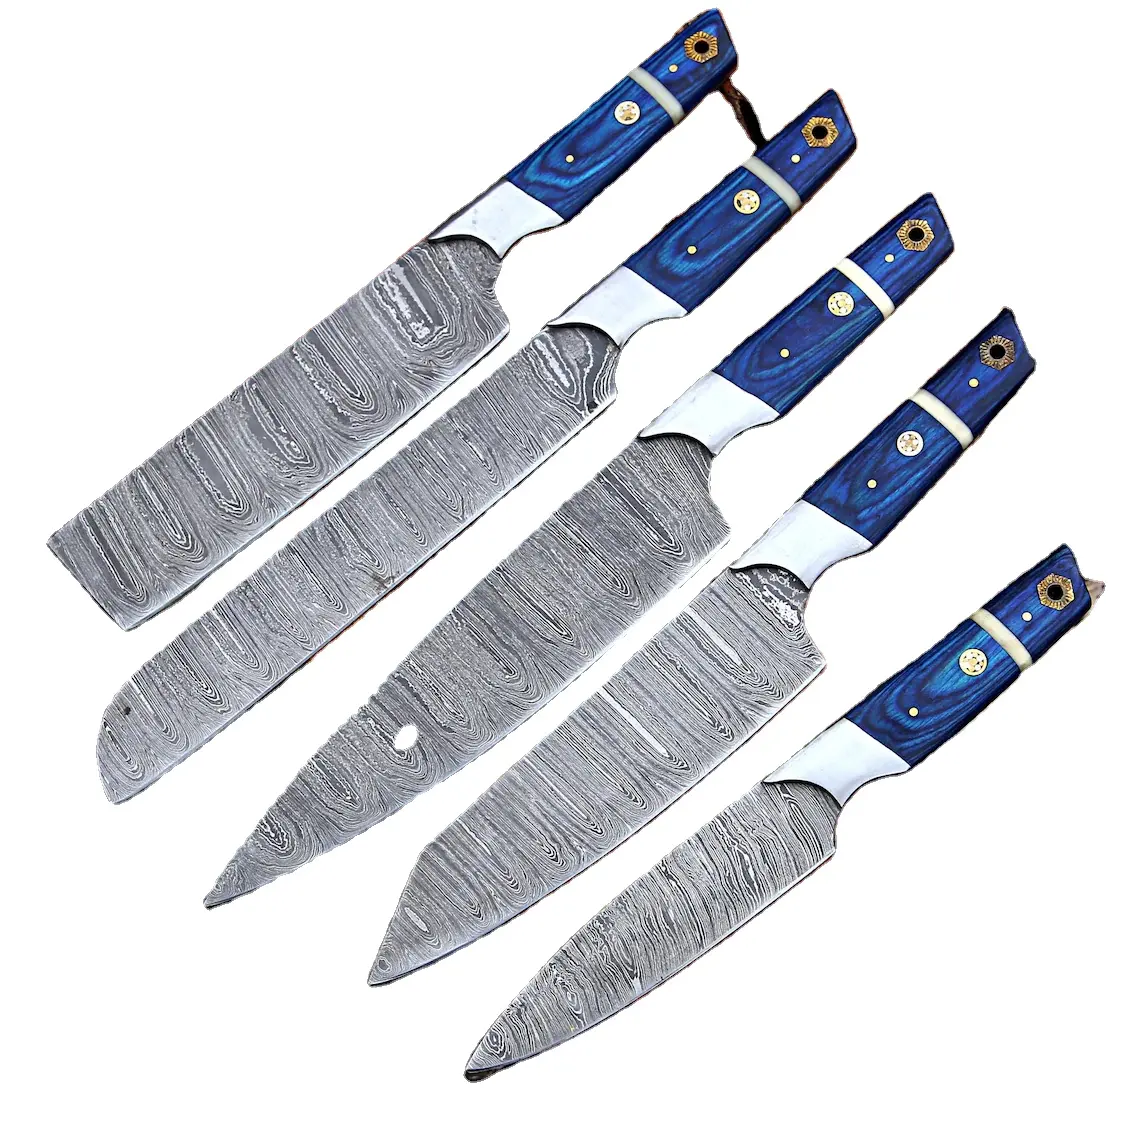 Koki baja Damaskus kustom Set 5 BH Set pisau kualitas tinggi untuk Penggunaan dapur profesional Set pisau koki dengan tas